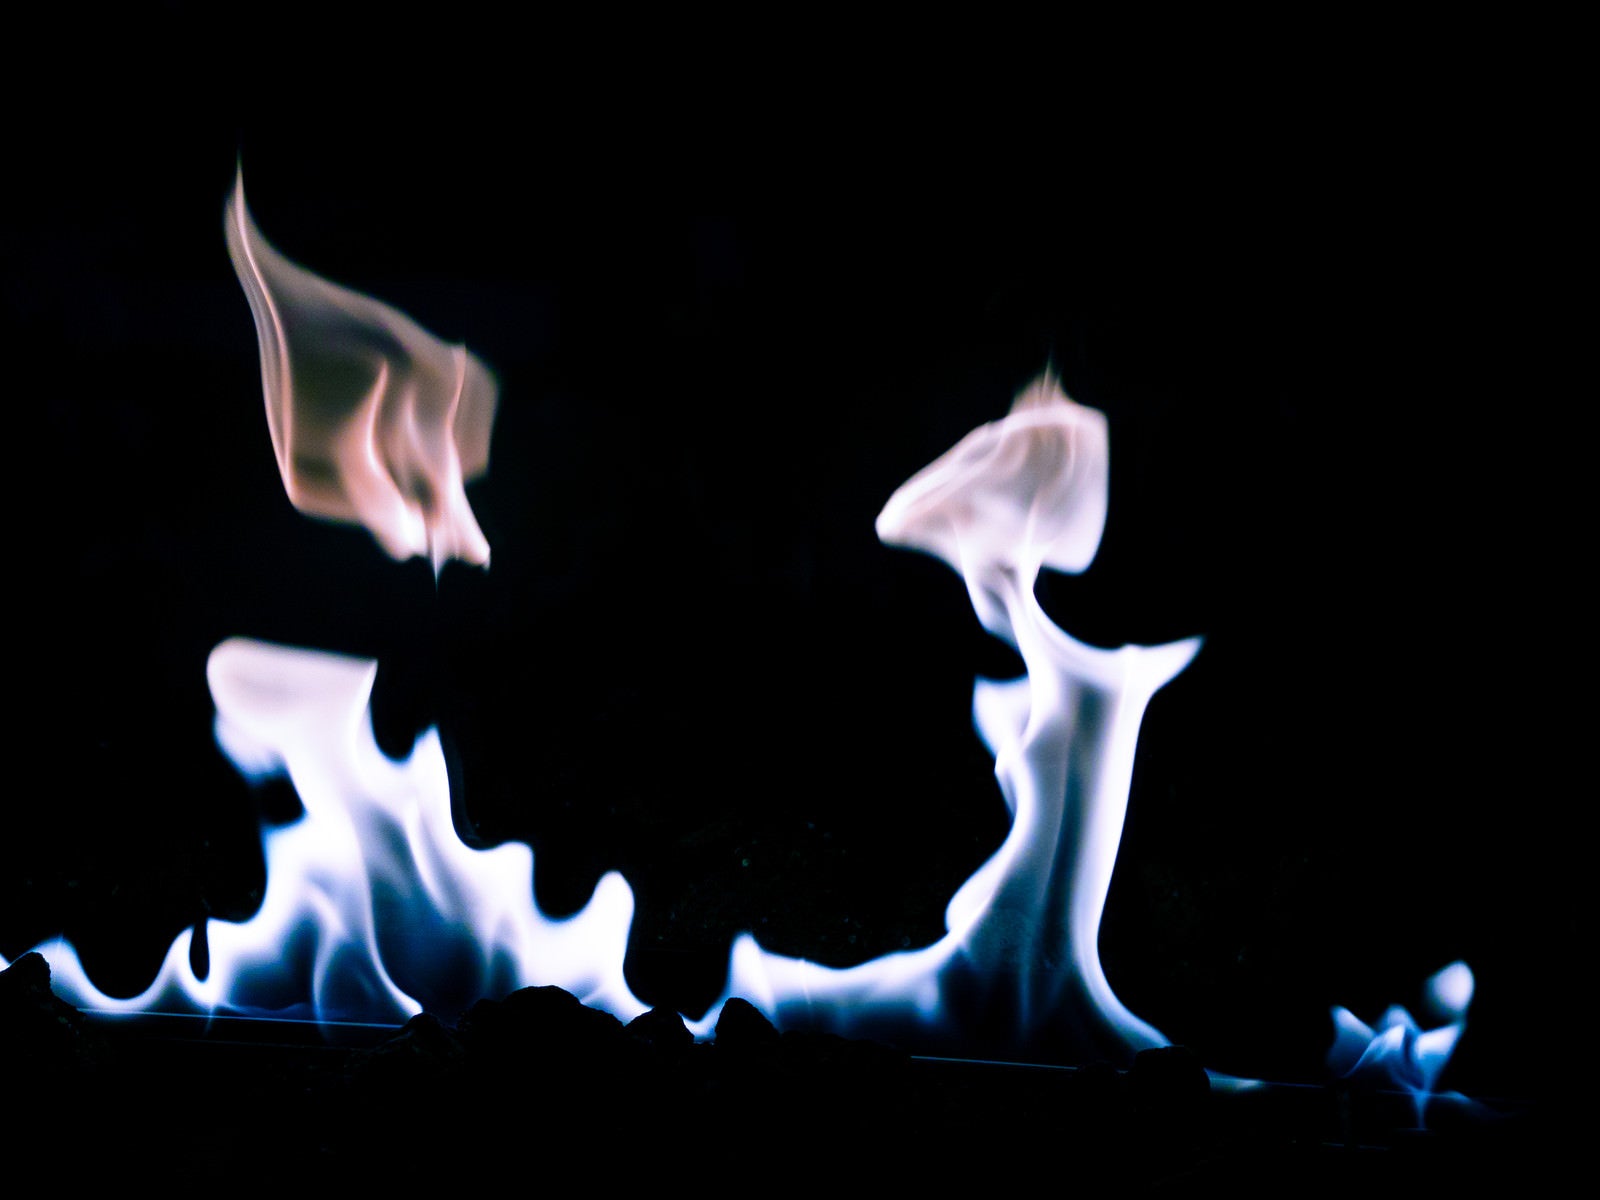 「不完全燃焼」の写真